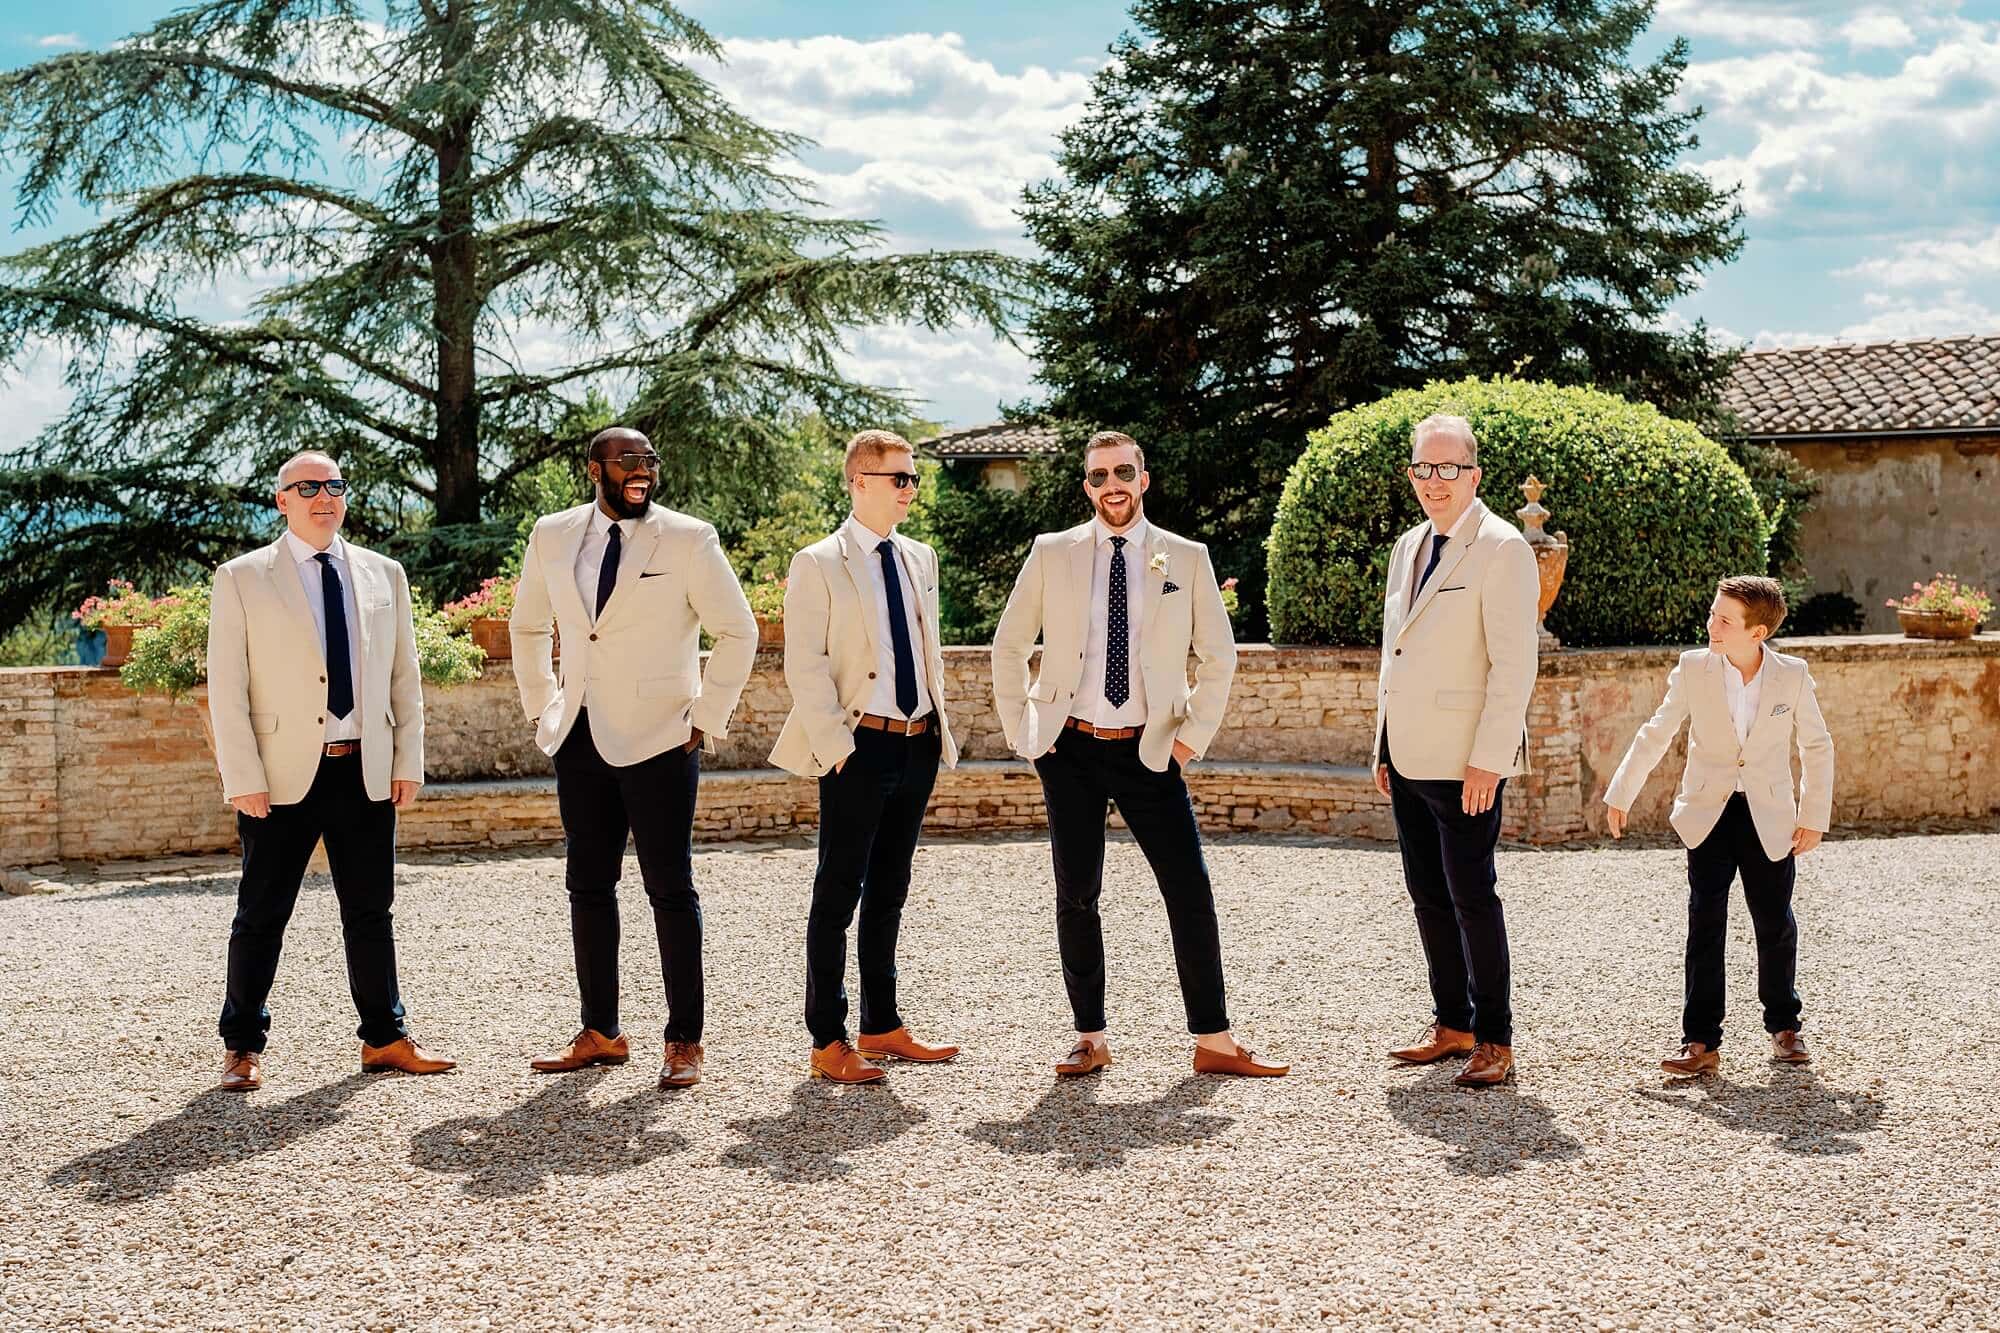 The groom and groomsmen posing at the villa in Siena